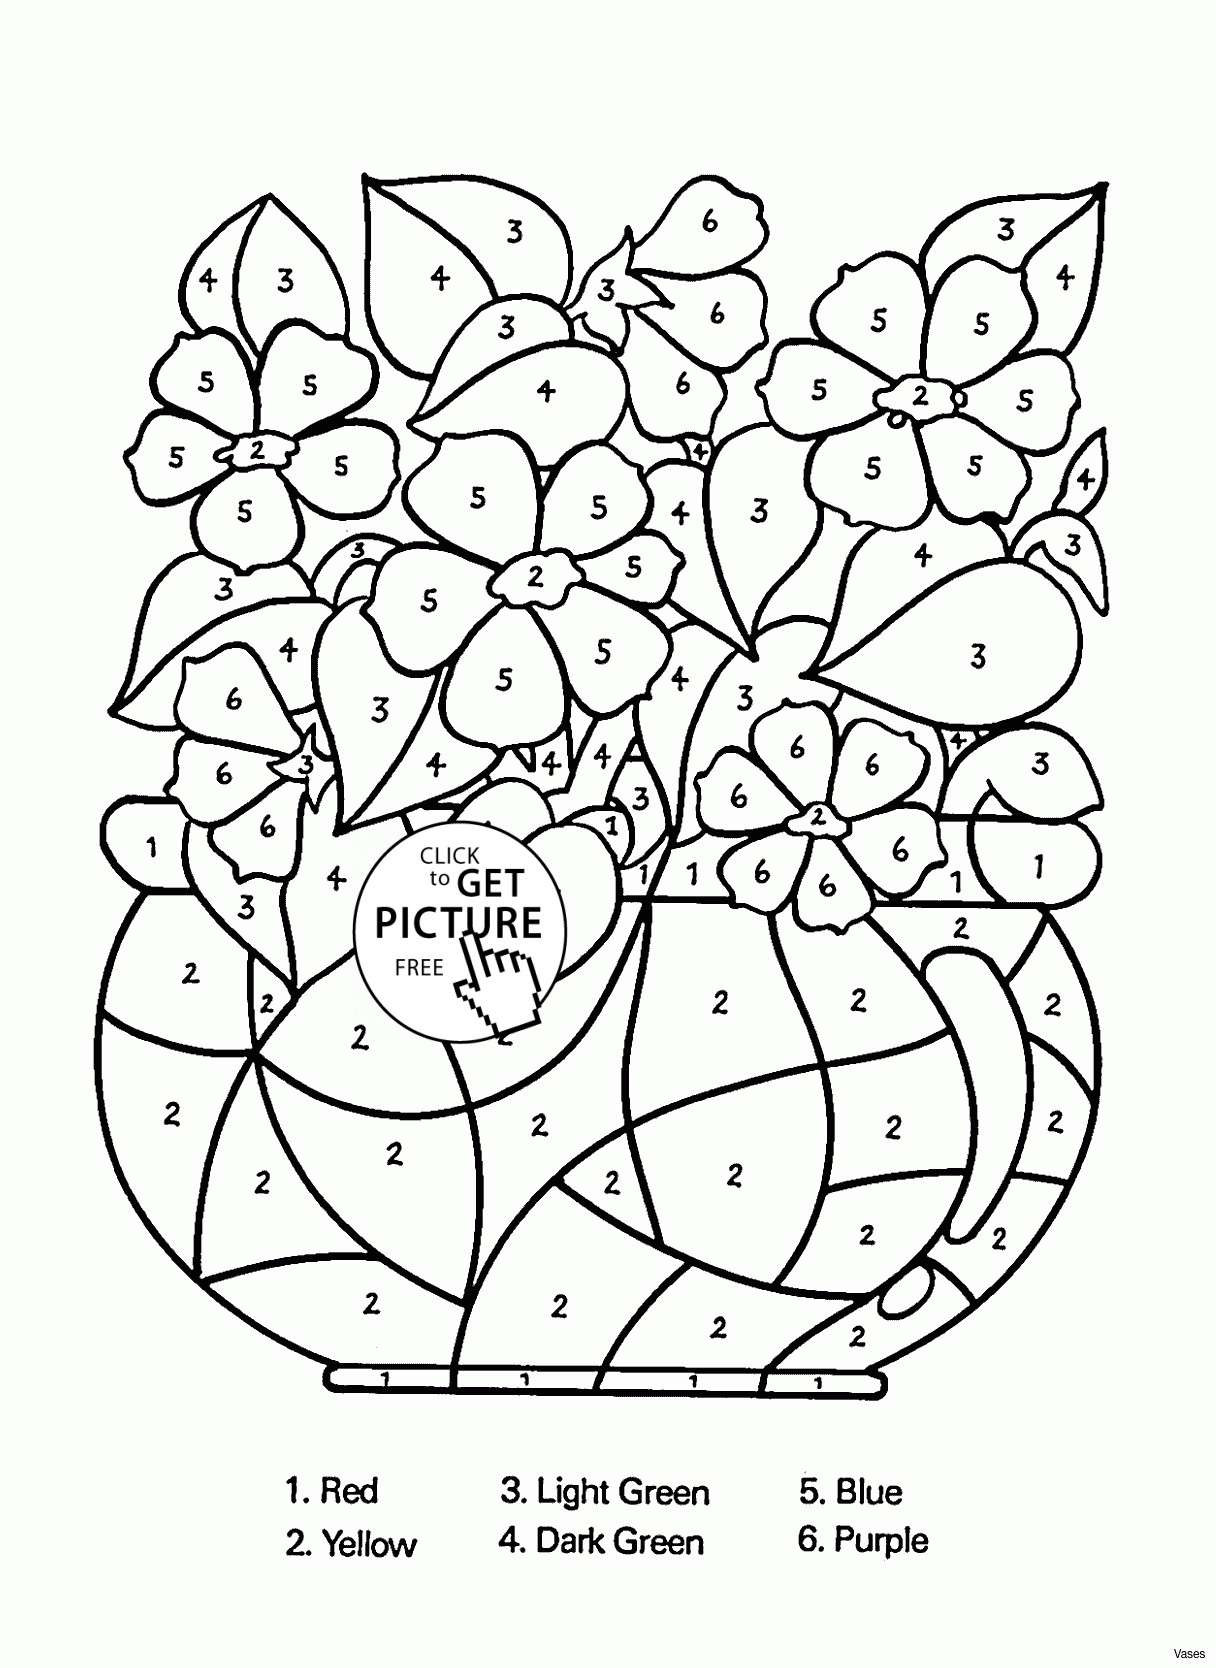 30 Recommended Light Bulb Flower Vase 2024 free download light bulb flower vase of lighting strikes clipart elegant menu clipart fresh flower vase with regard to published september 4 2018 at 1216 ac297 1668 in new lighting strikes clipart